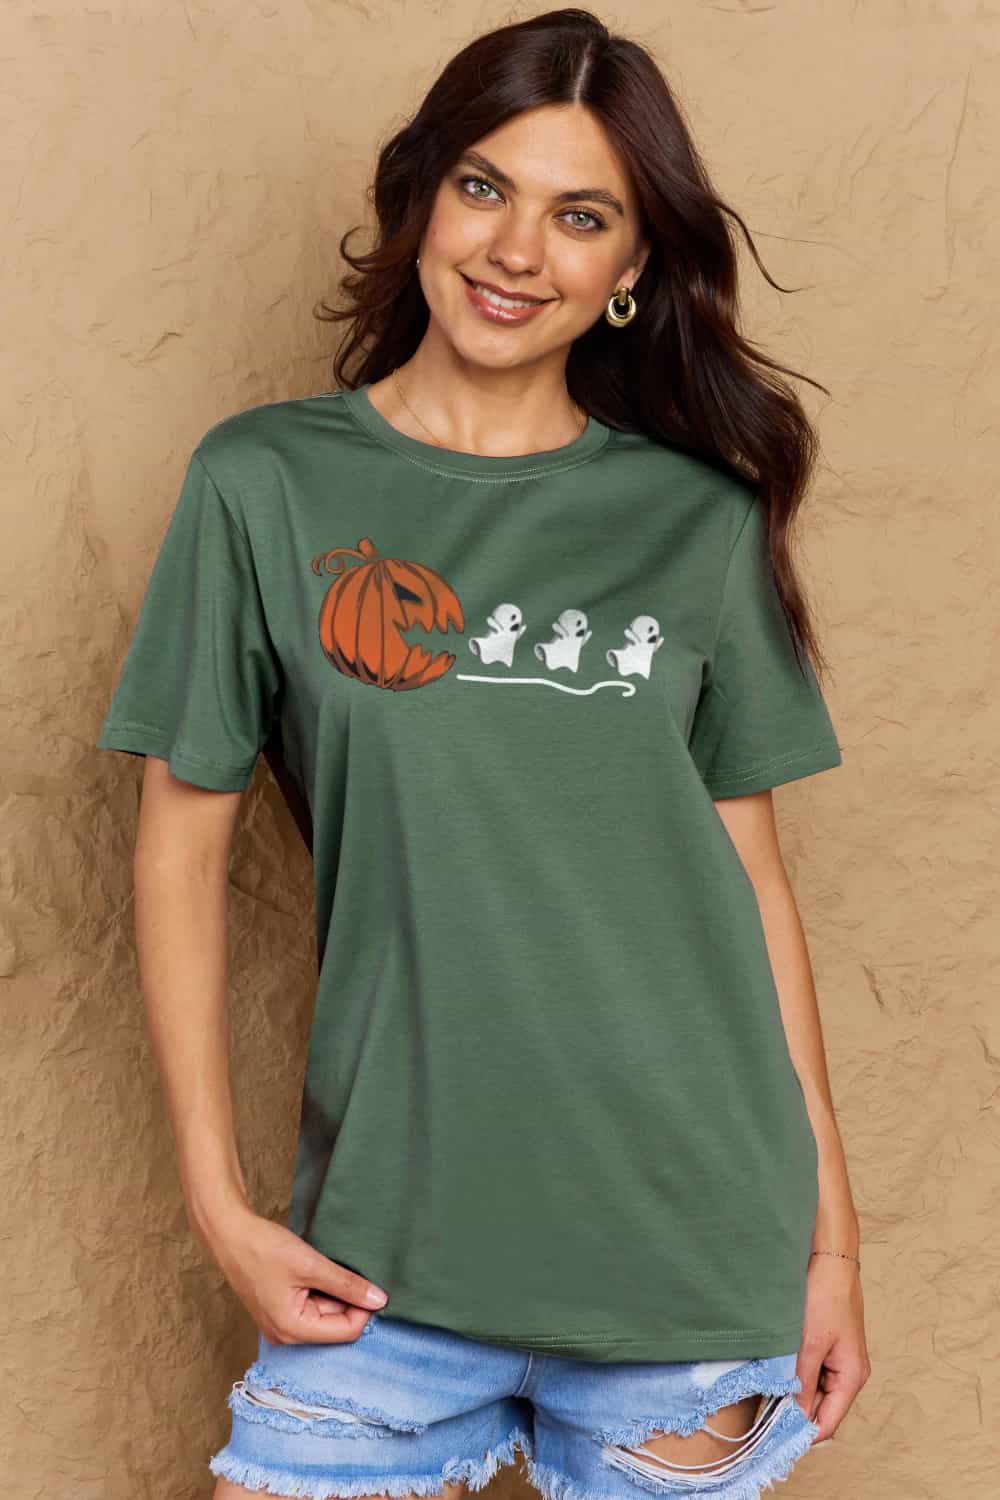 Full Size Jack-O’-Lantern Graphic Cotton T-Shirt - Green / S - T-Shirts - Shirts & Tops - 25 - 2024